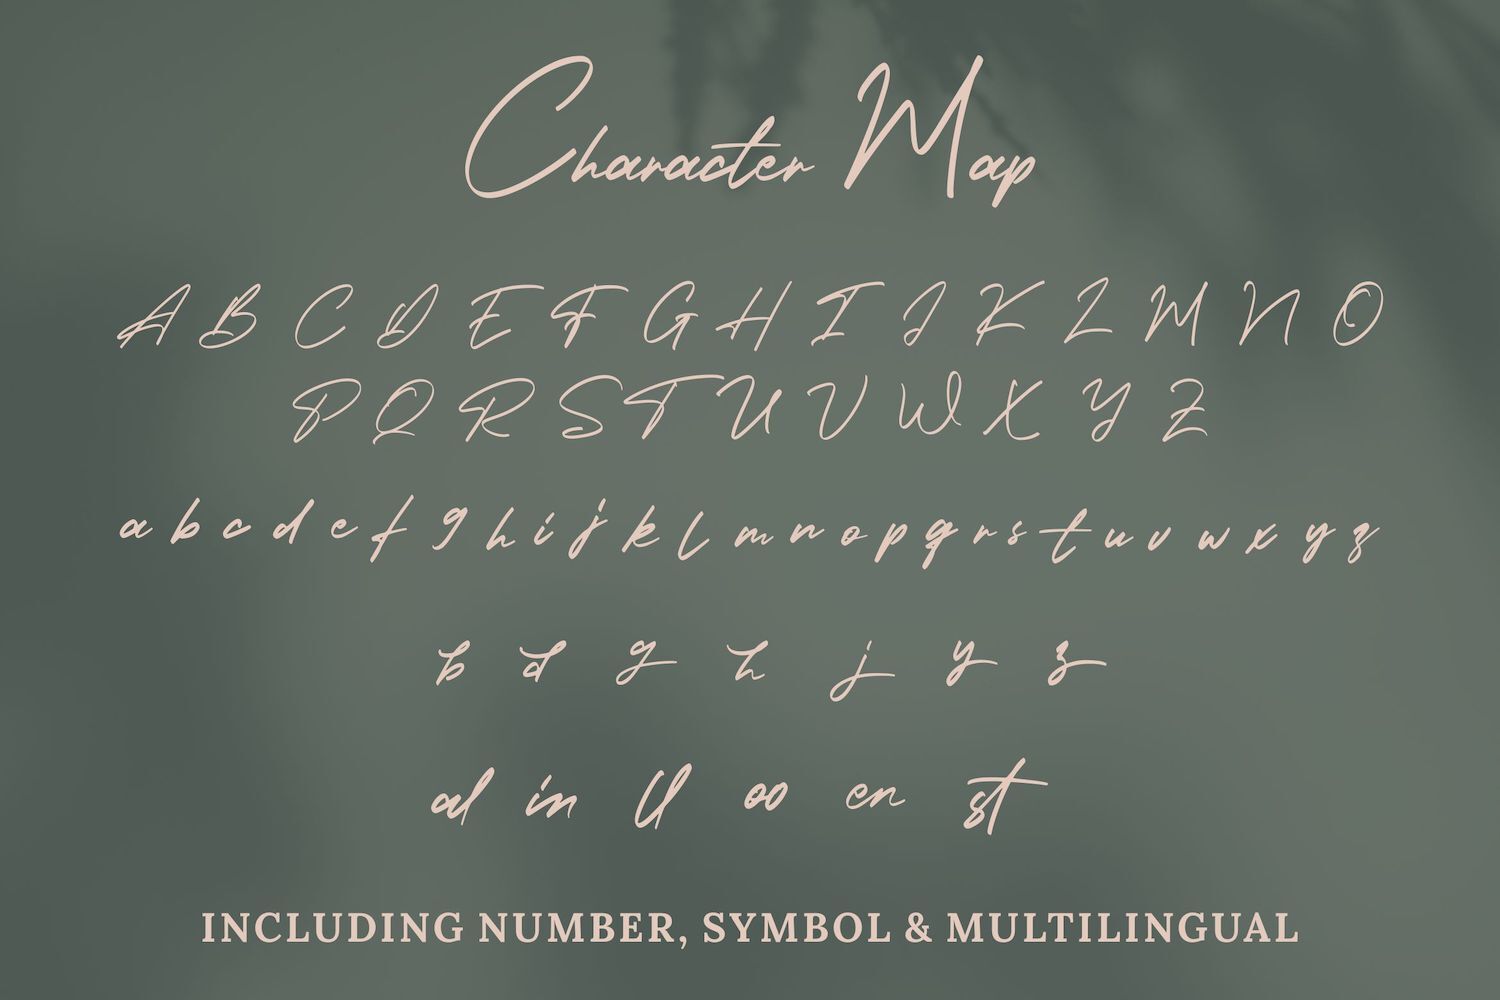 Holland Gateway Handwritten Script Font By Stringlabs Thehungryjpeg Com